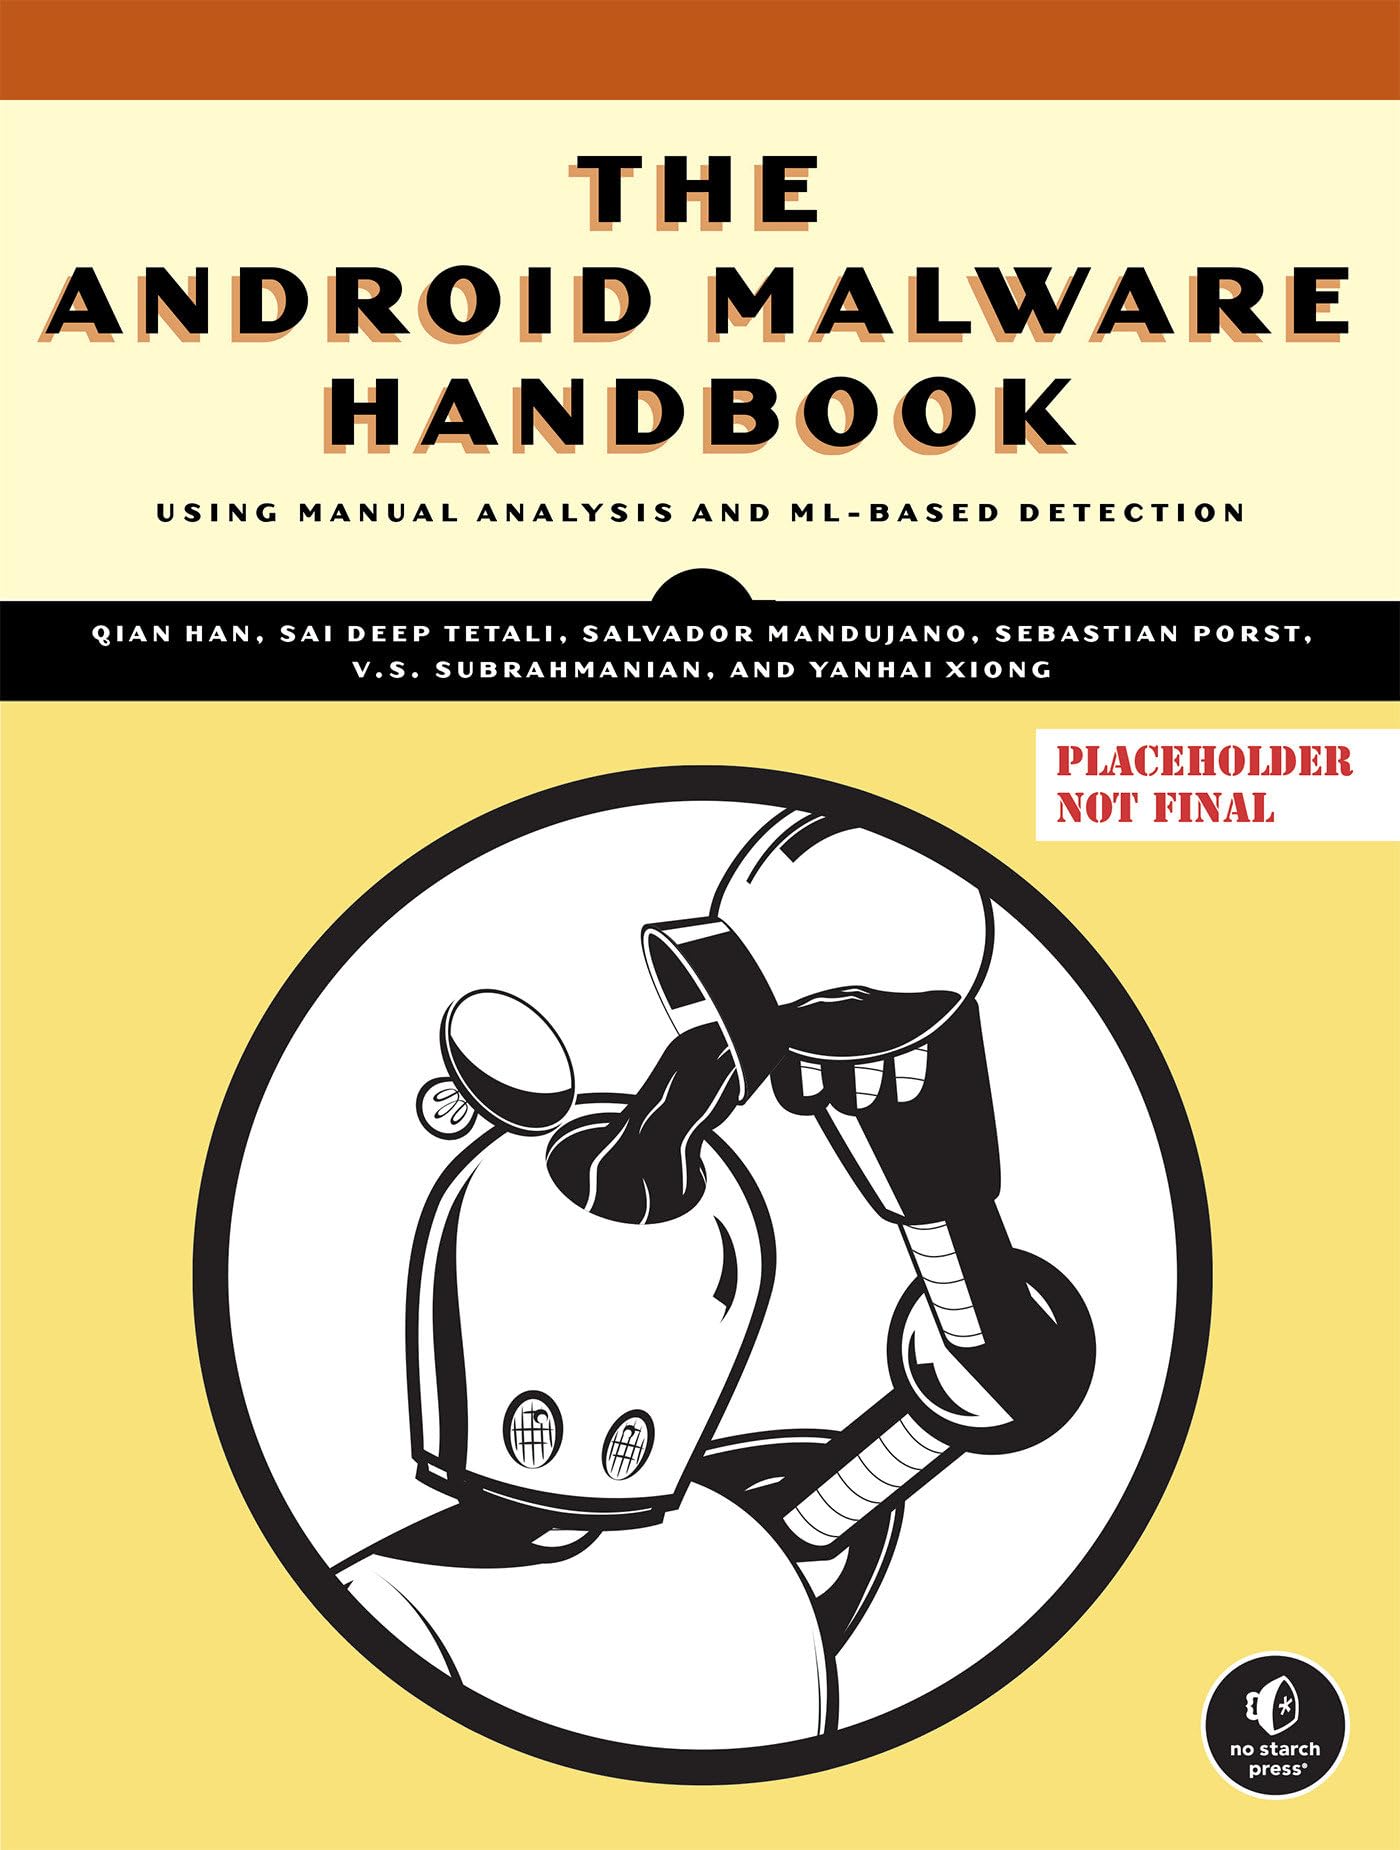 The Android Malware Handbook: Using Manual Analysis and ML-Based Detection